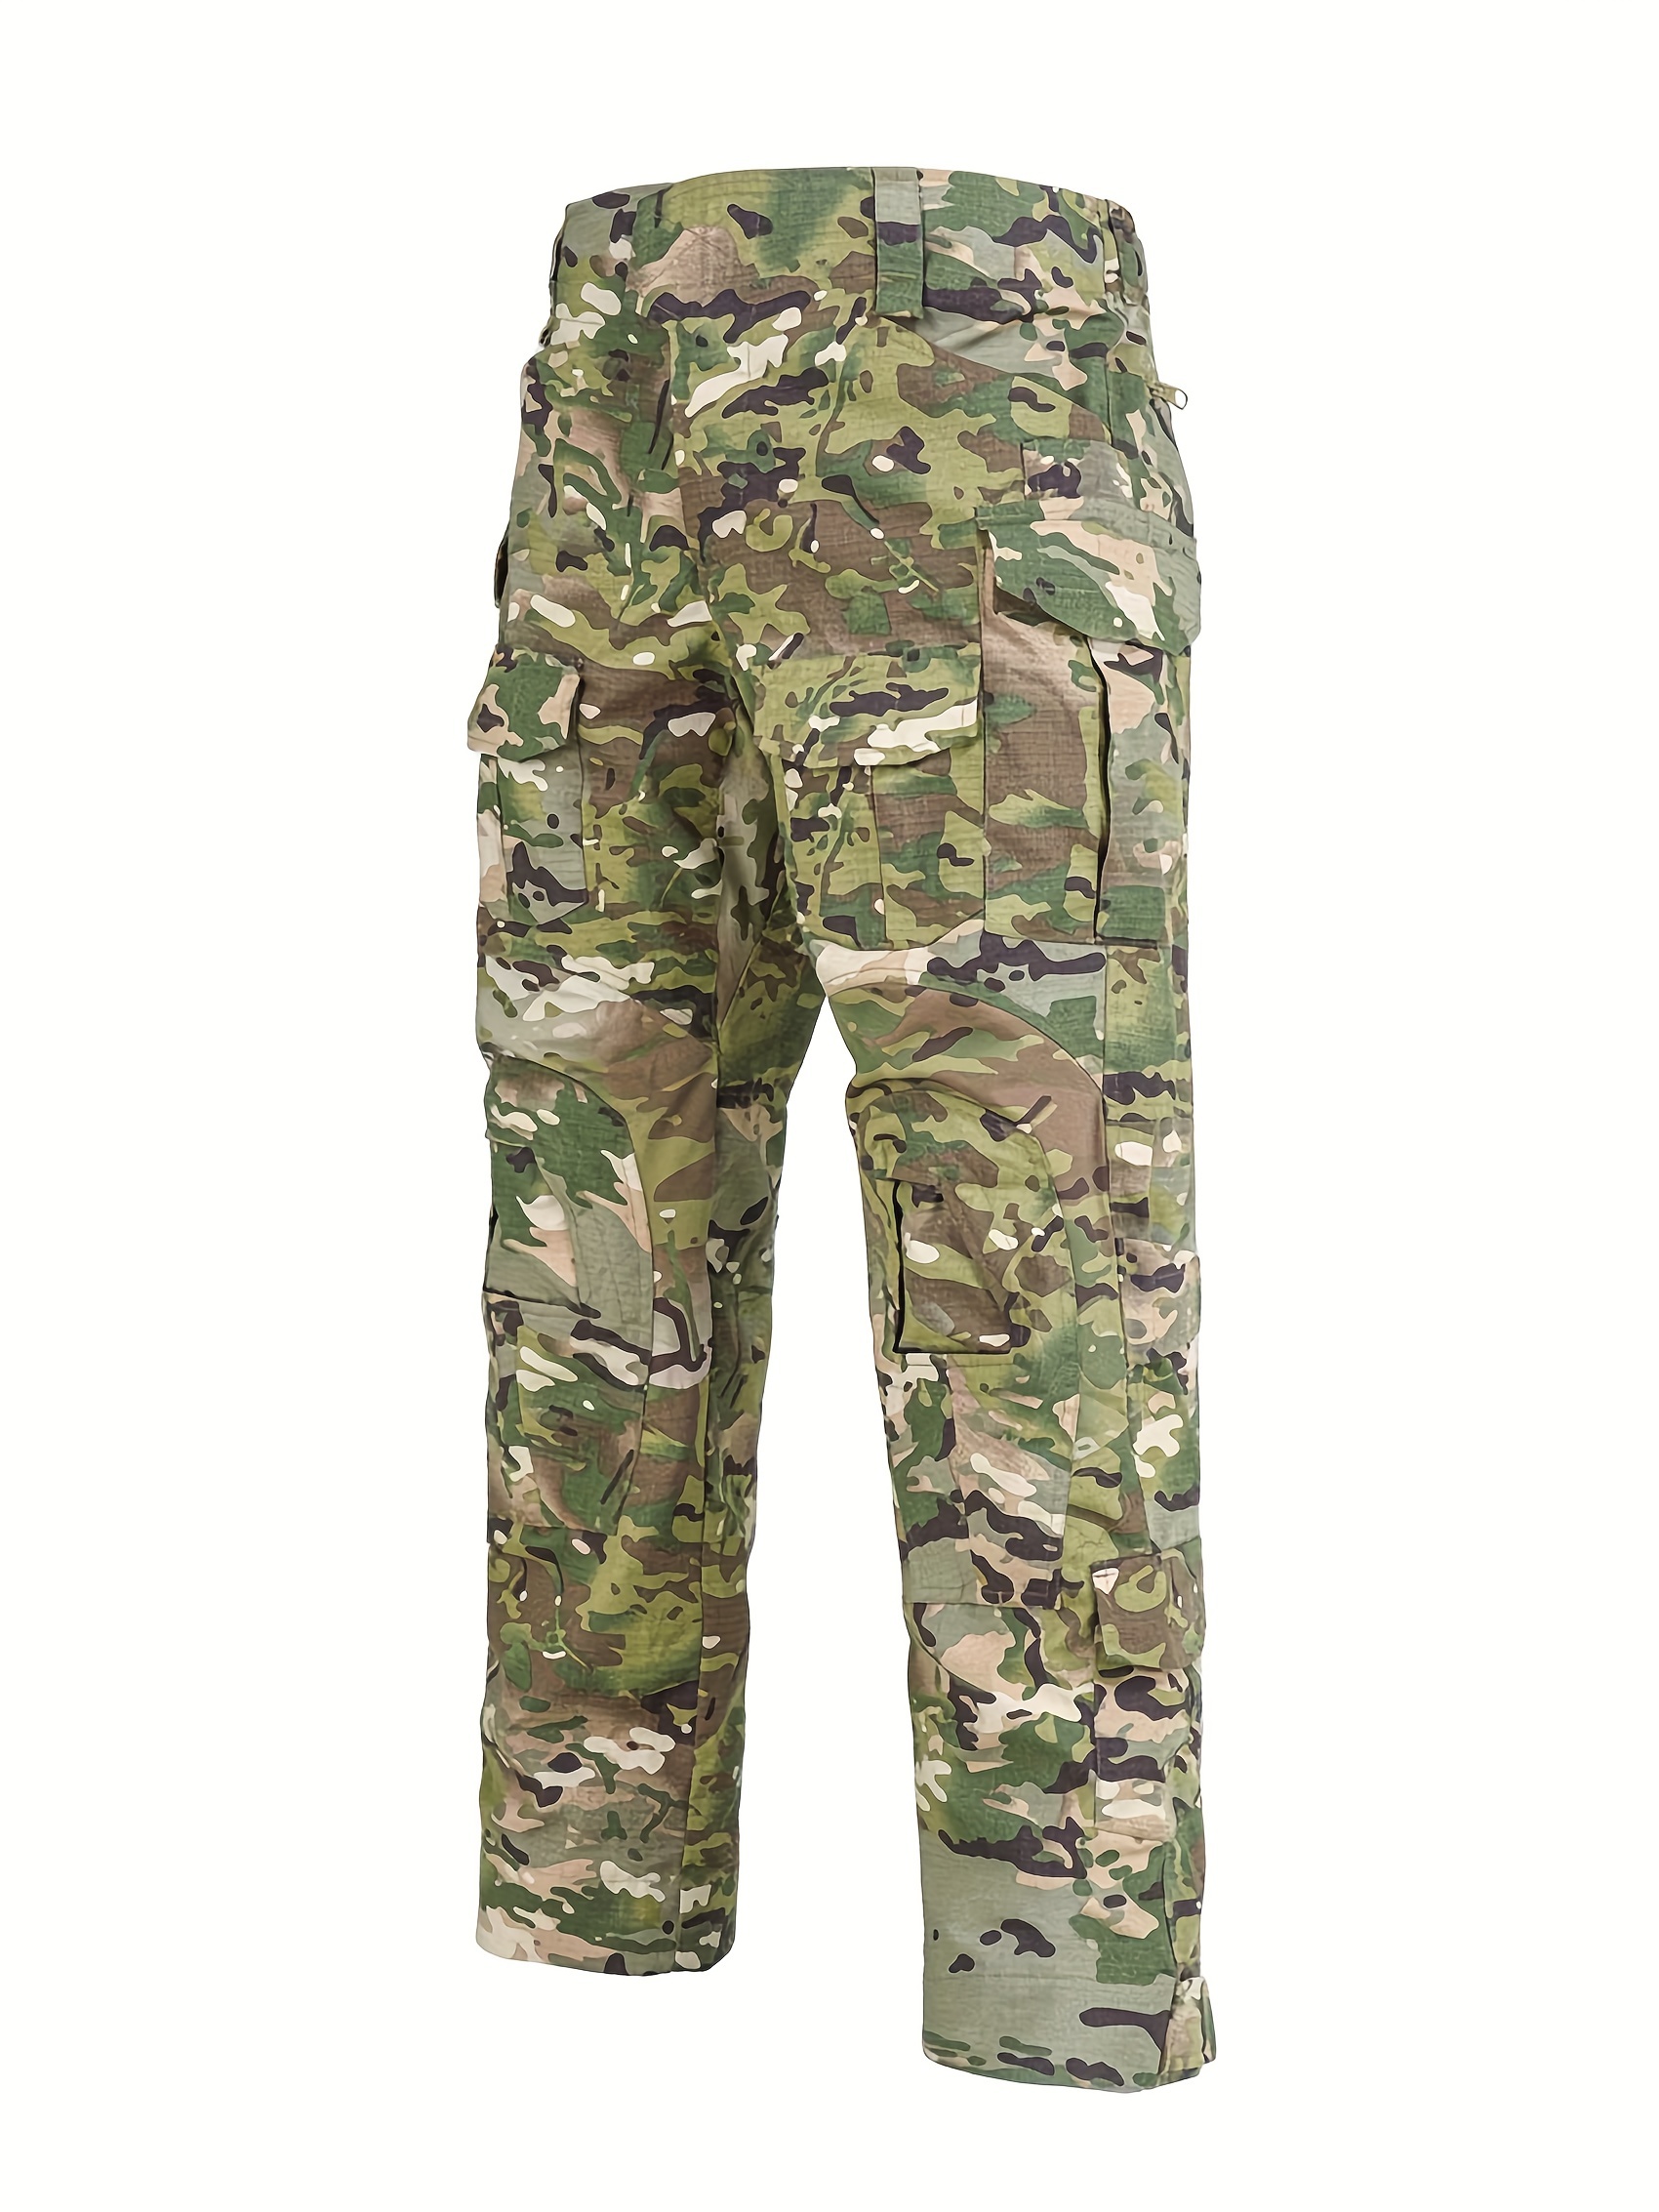 Men Militar Uniform Tactical Military Outdoor Combat Camouflage